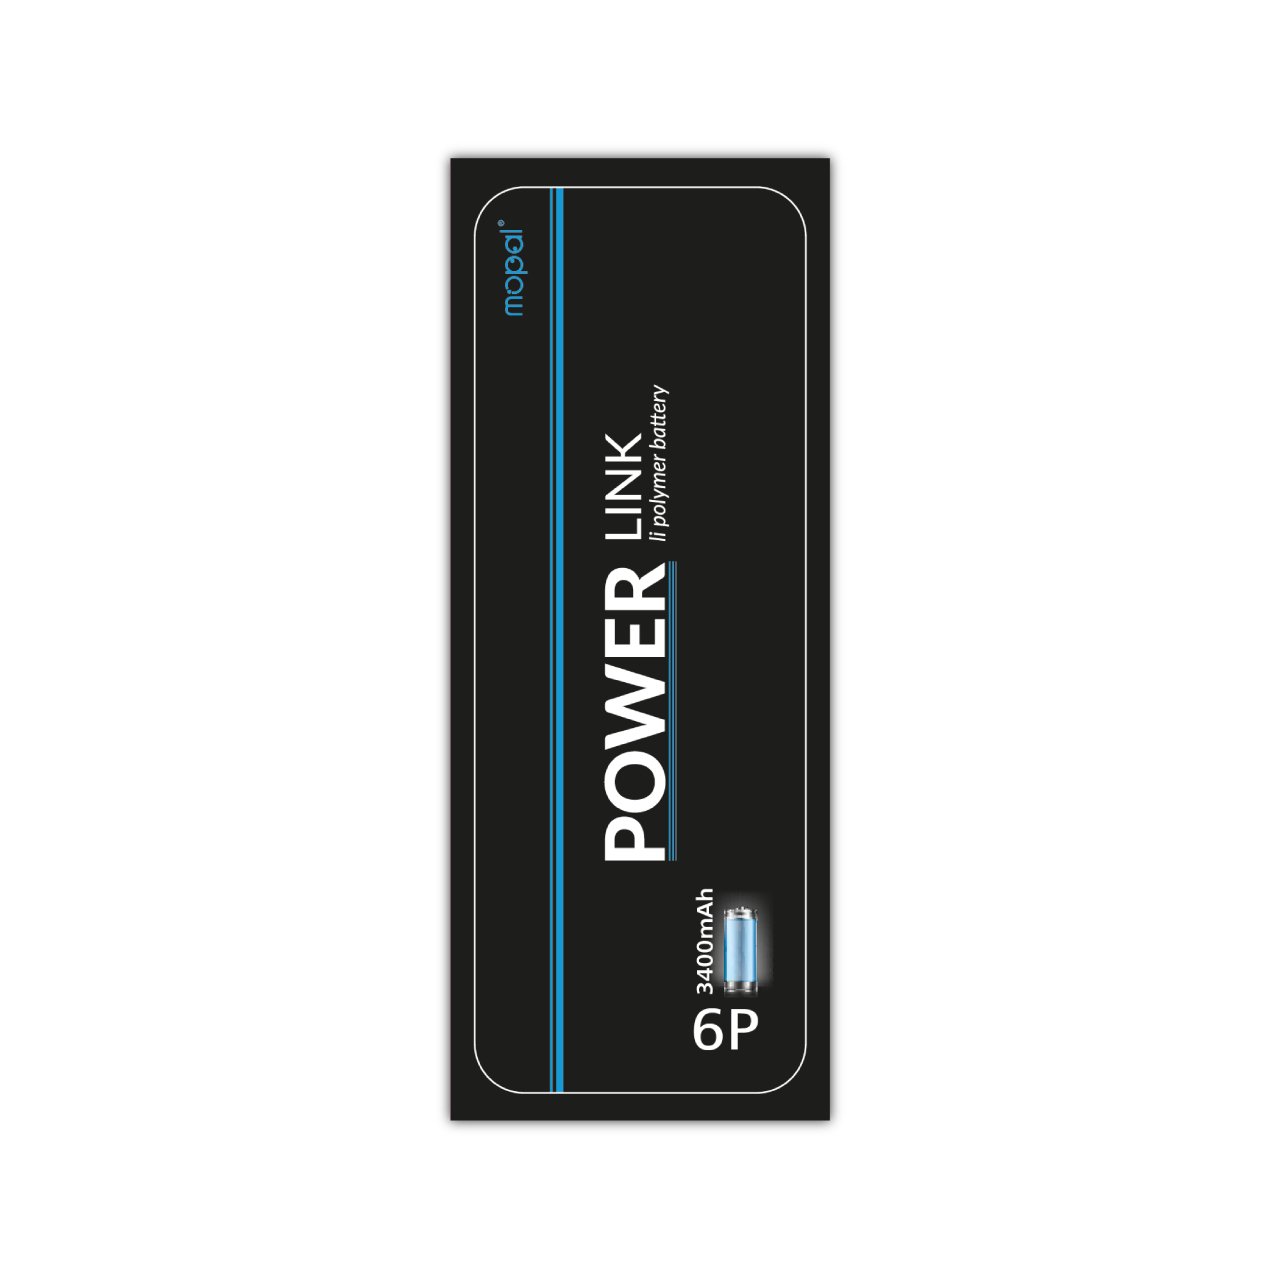 Mopal Power Link İphone 6 Plus Ekstra Güçlü 3400 Mah Batarya